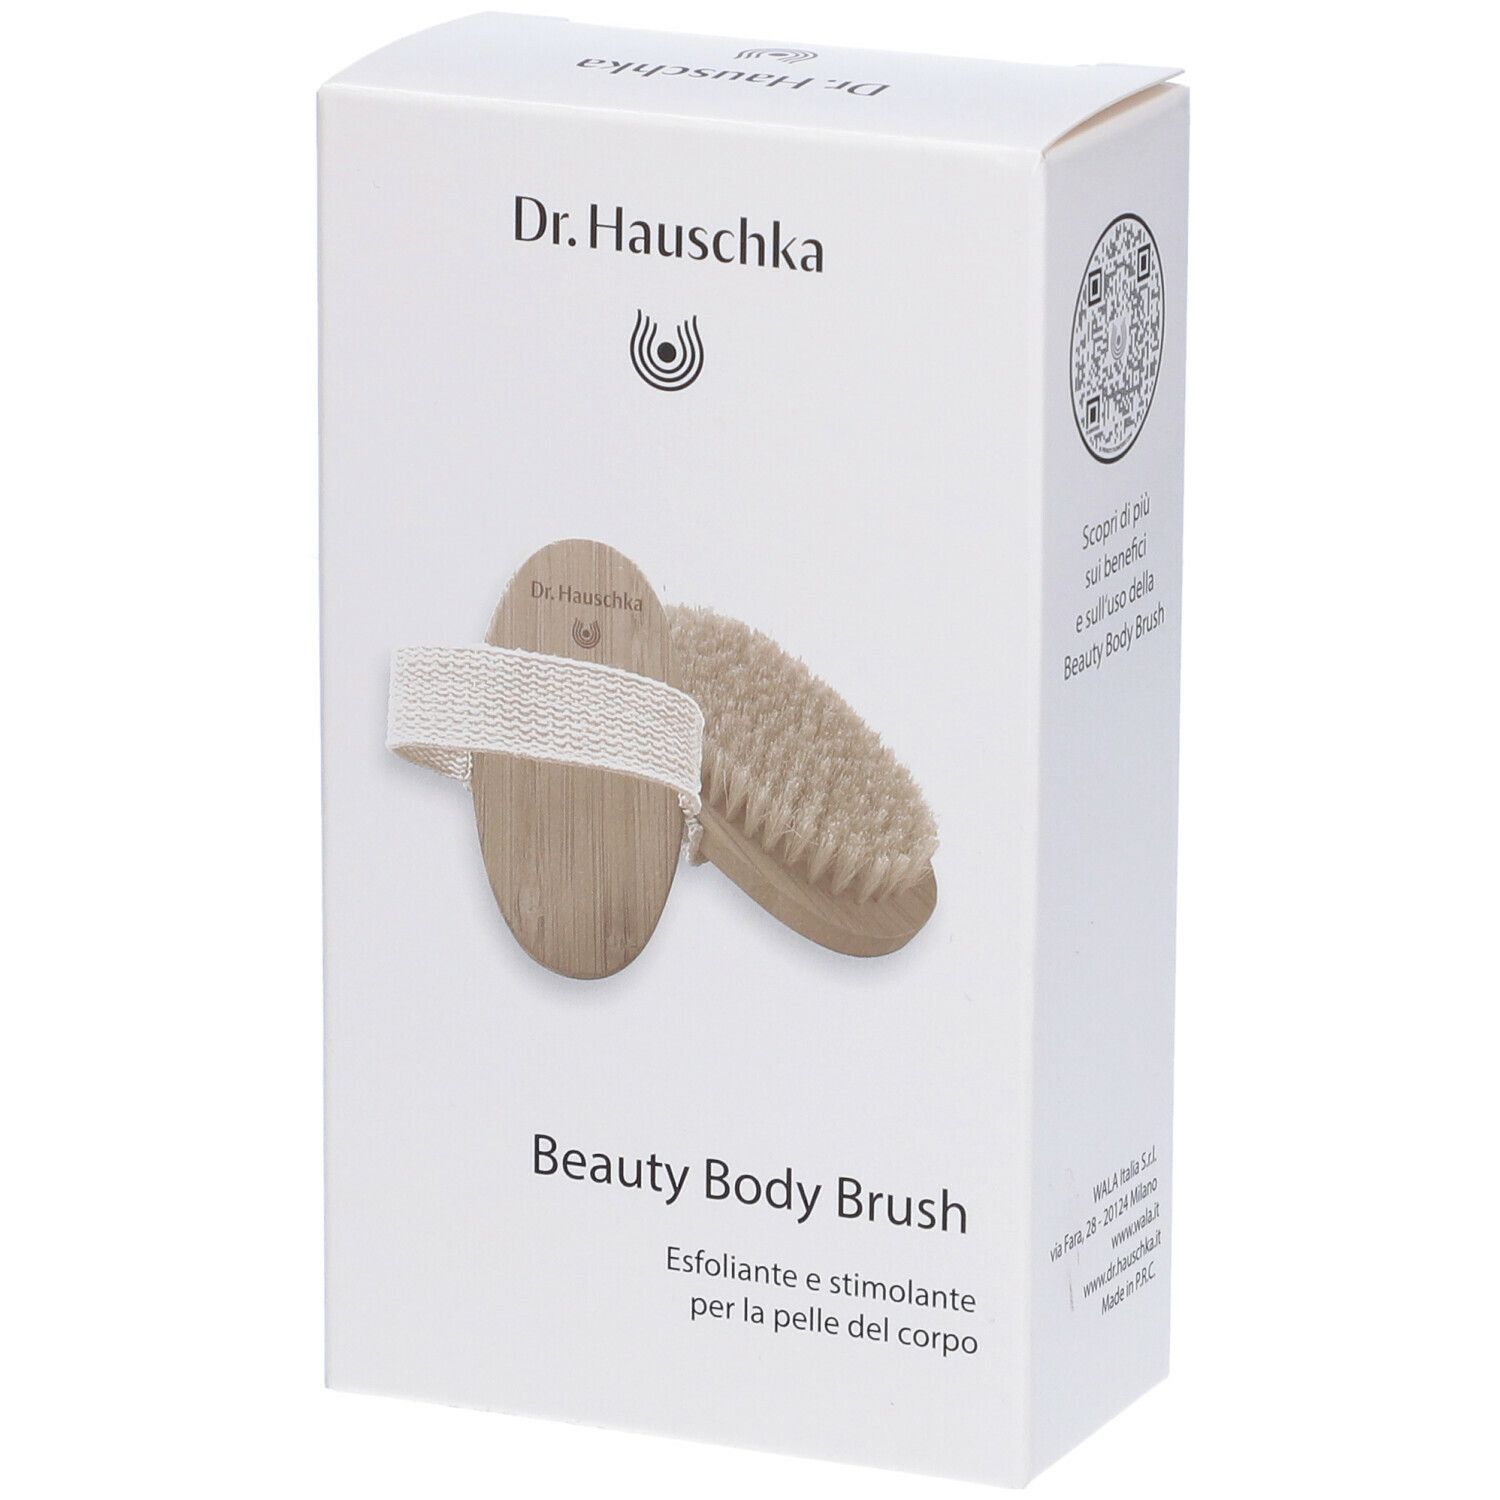 Dr. Hauschka Beauty Body Brush